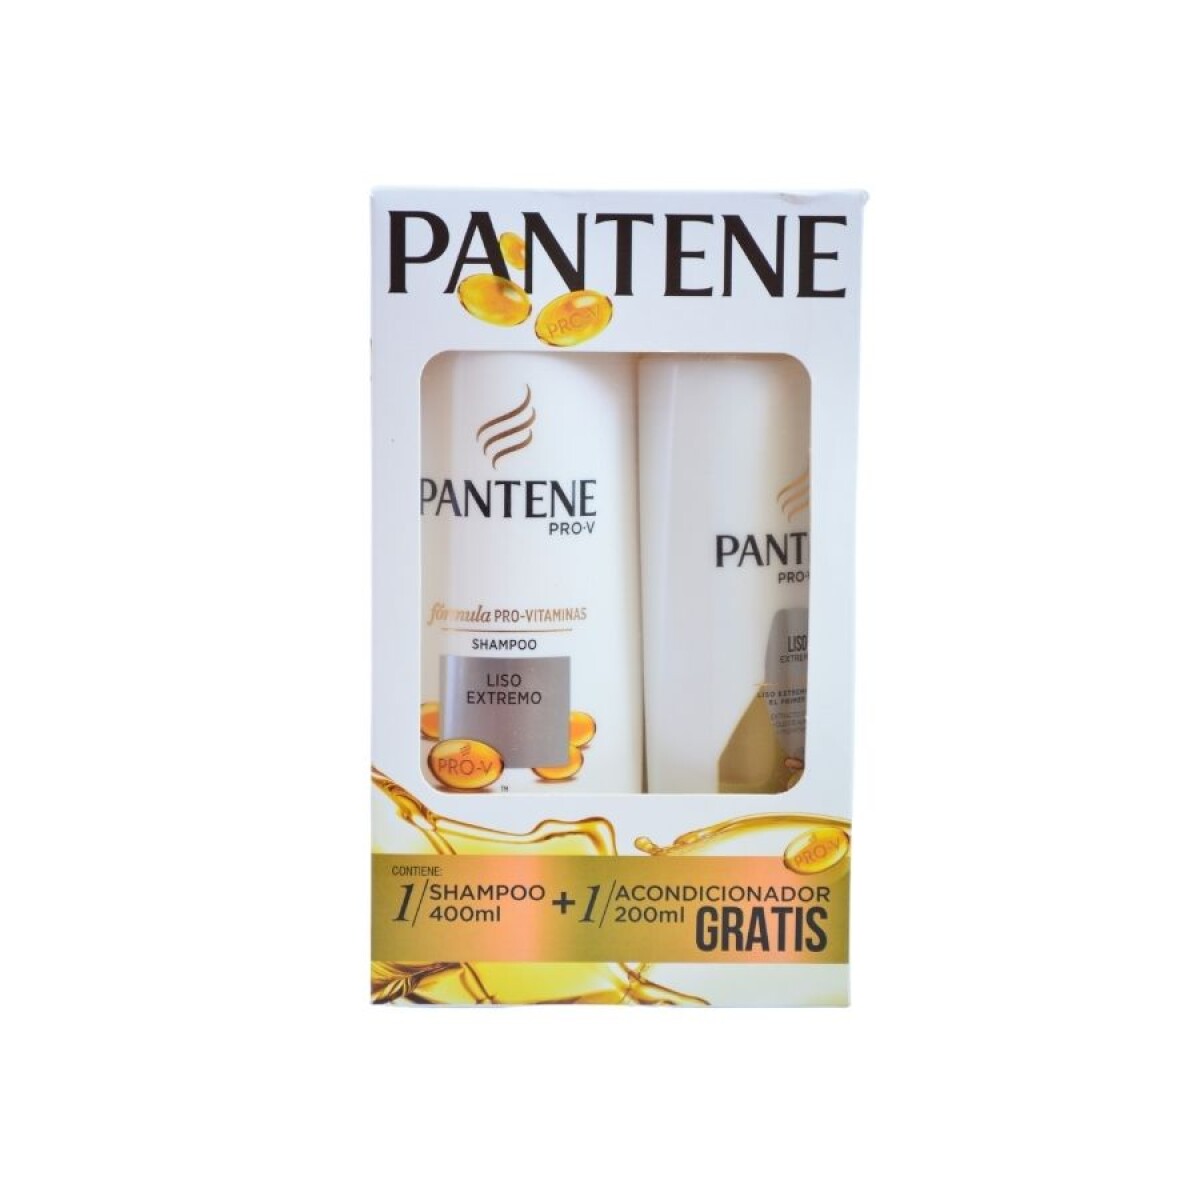 Pack PANTENE liso extremo shampoo 400 ml + acondicionador 200 ml 